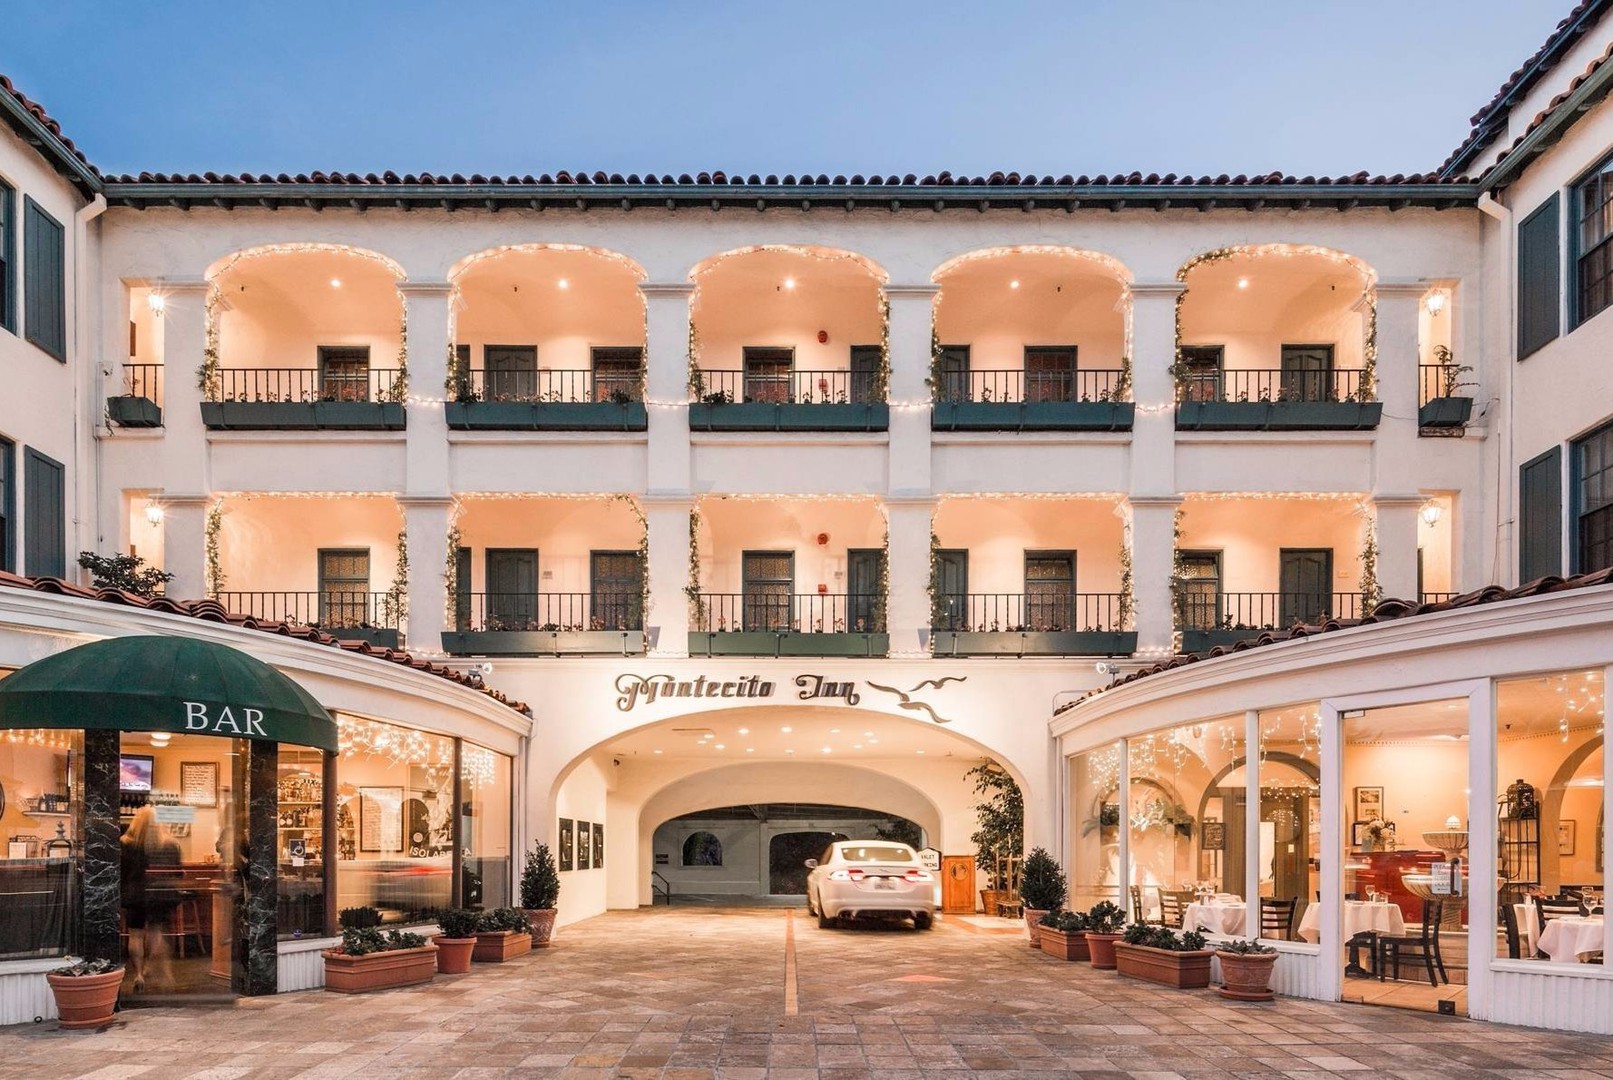  Exterior View of Montecito Inn Santa BarbaraTour Package